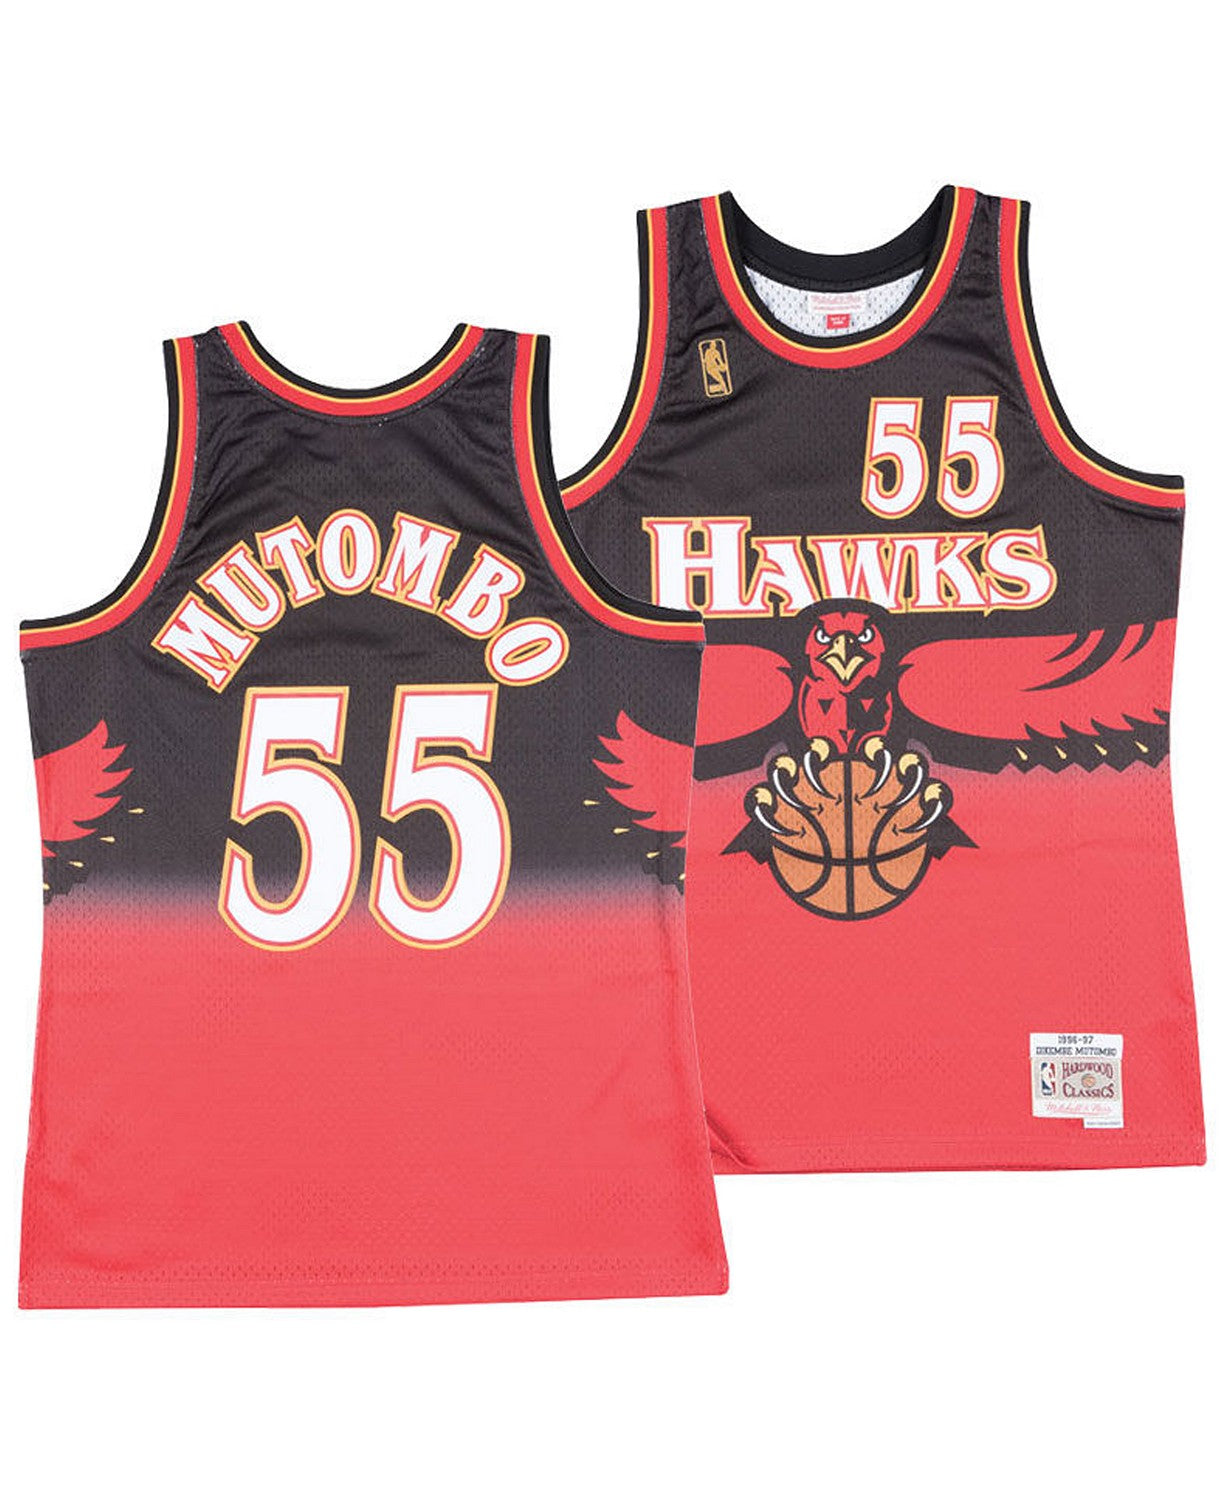 Dikembe Mutombo Atlanta Hawks 1996-1997 Authentic Jersey - Rare